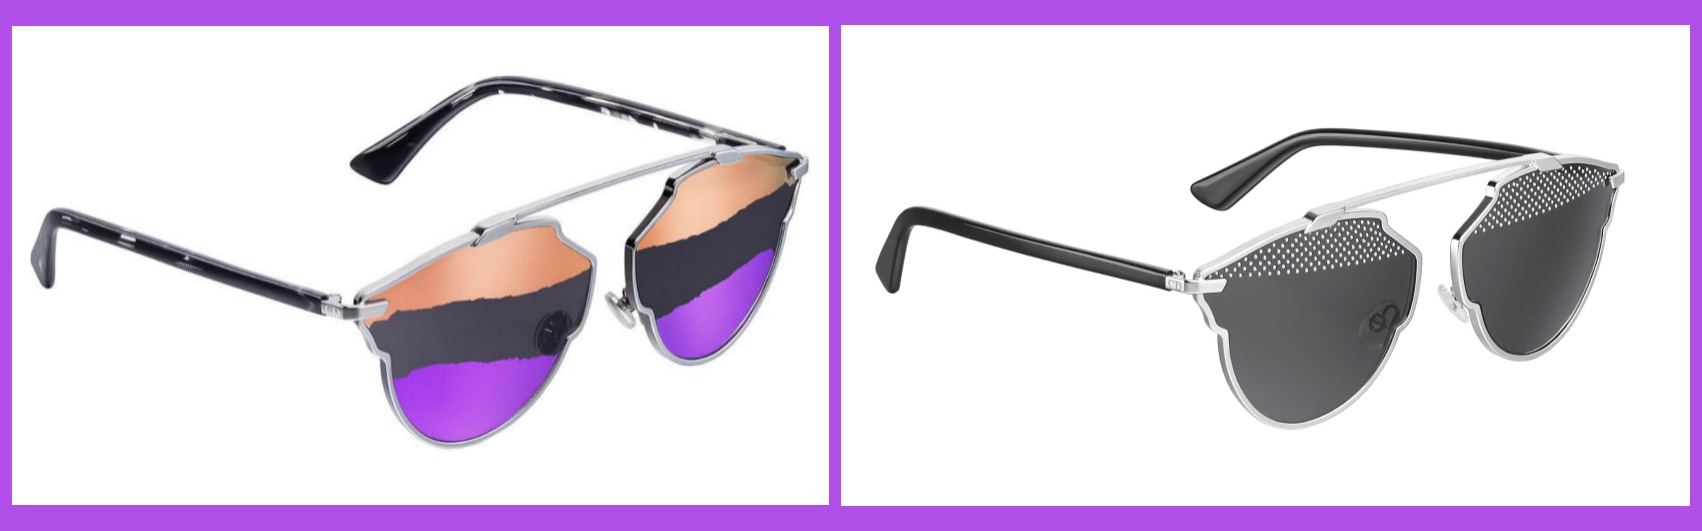 dior-so-real-sunglasses-collage